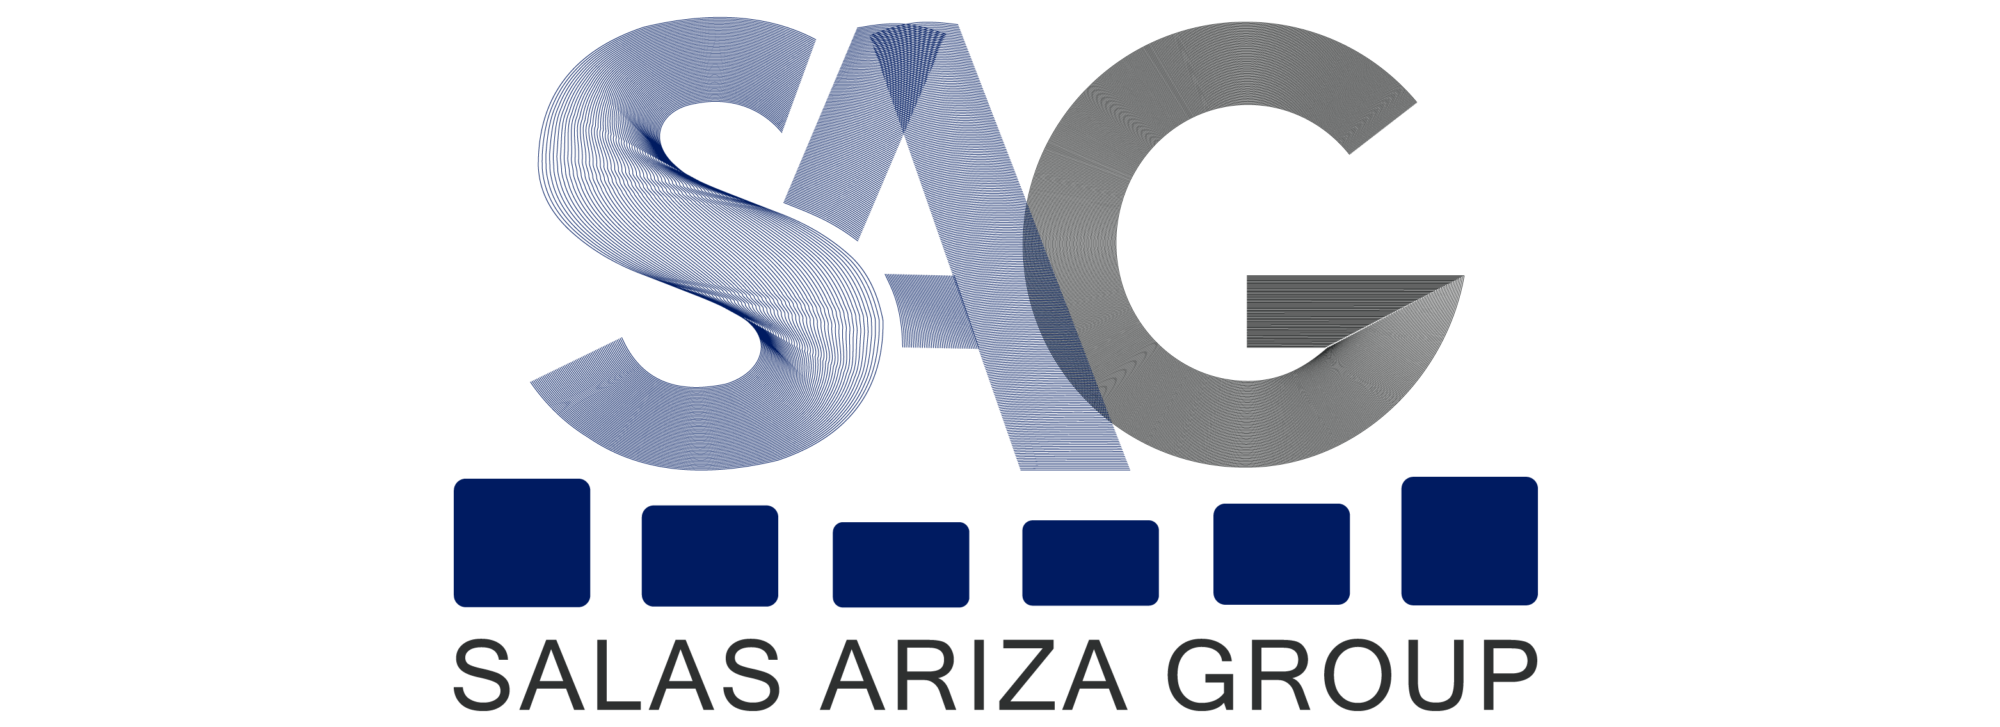 Salas Ariza Group